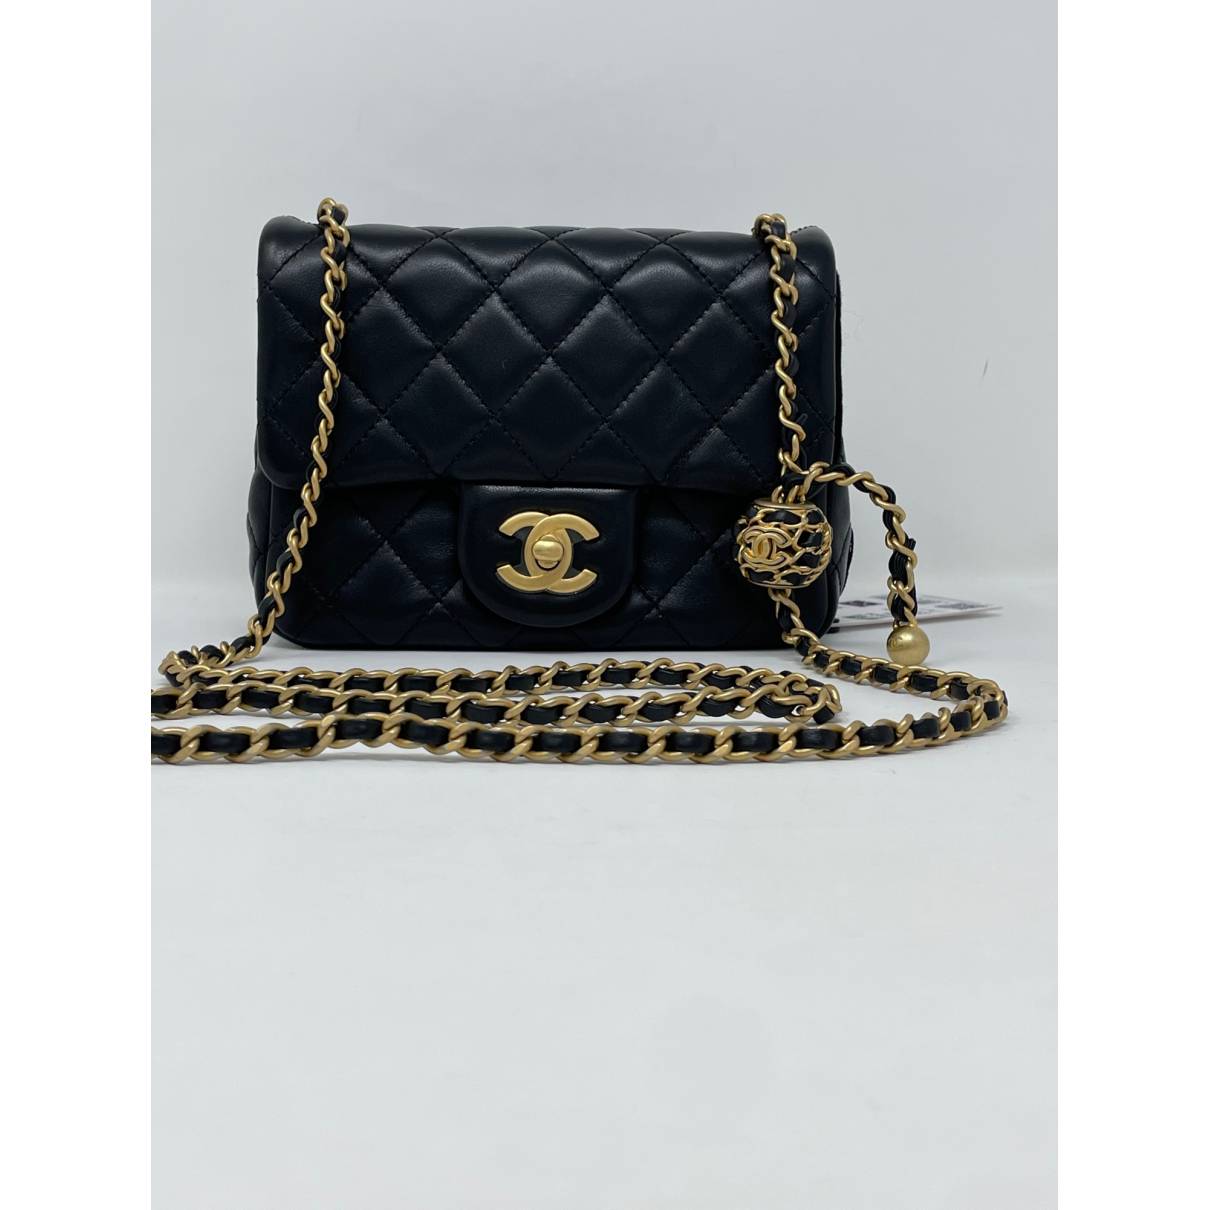 Chanel Trendy Cc Black - 77 For Sale on 1stDibs